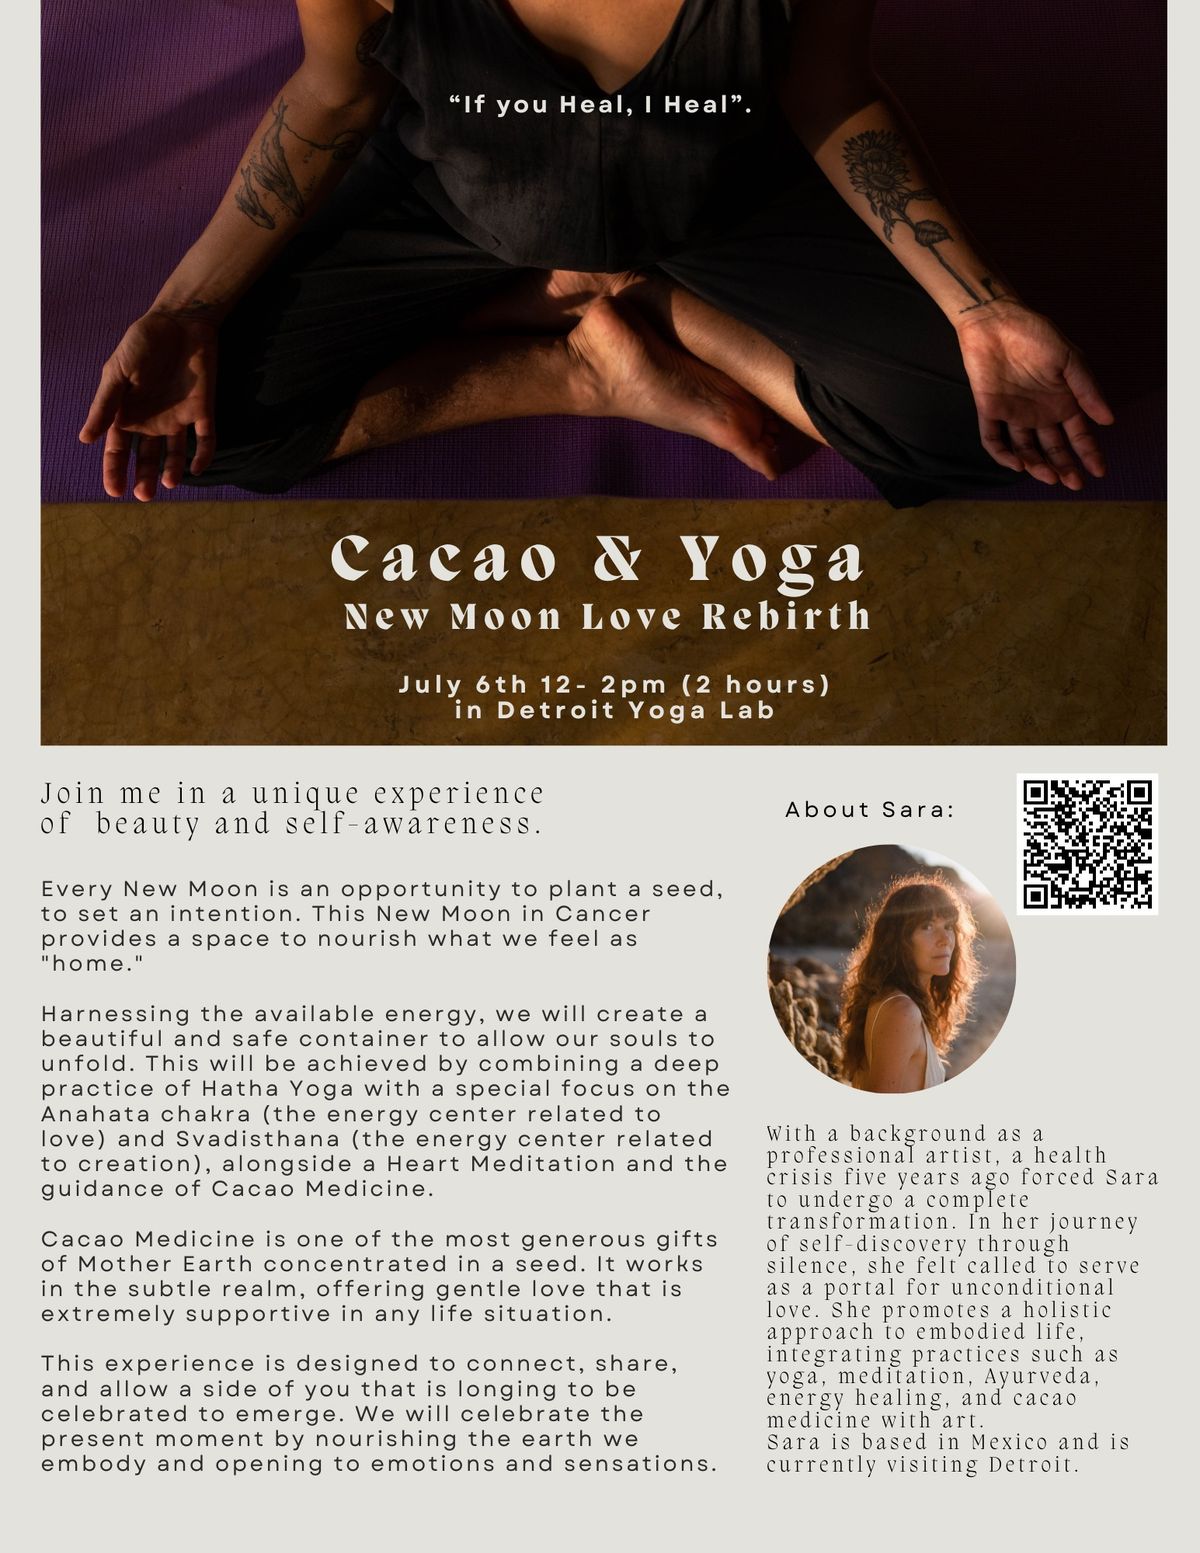 Cacao + Yoga New Moon Love Rebirth